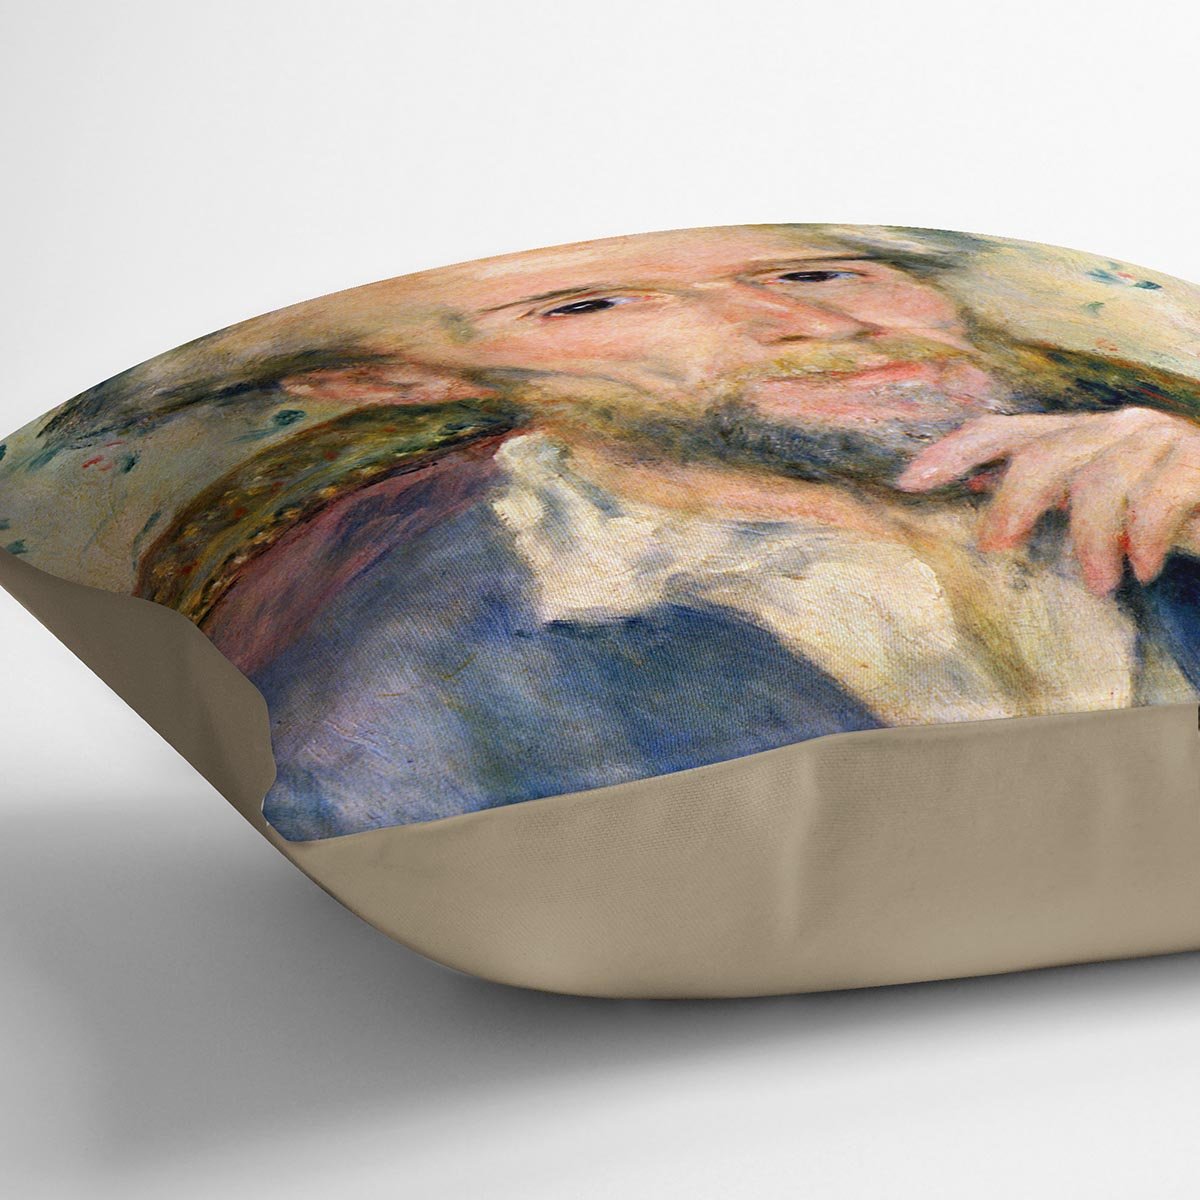 Portrait of a man by Renoir Throw Pillow